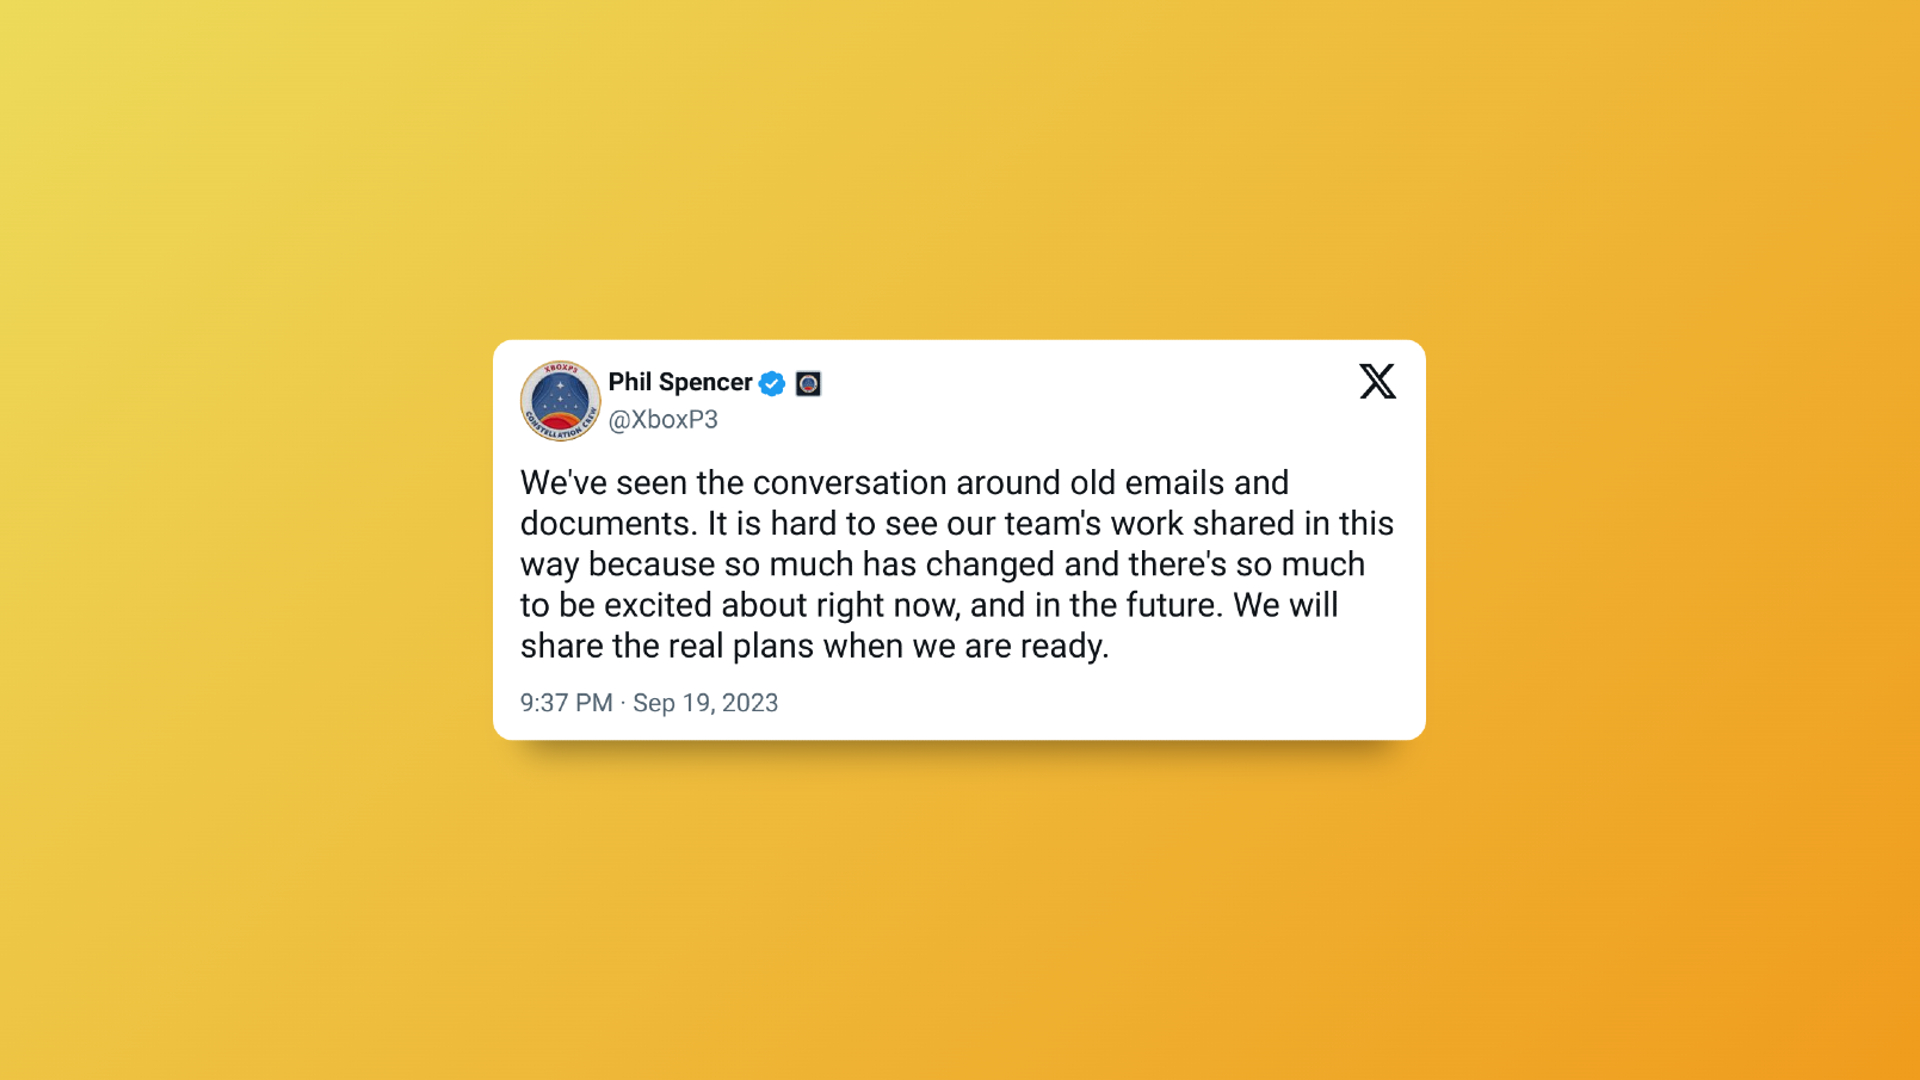 Tweet from Phil Spencer regarding the Microsoft leak